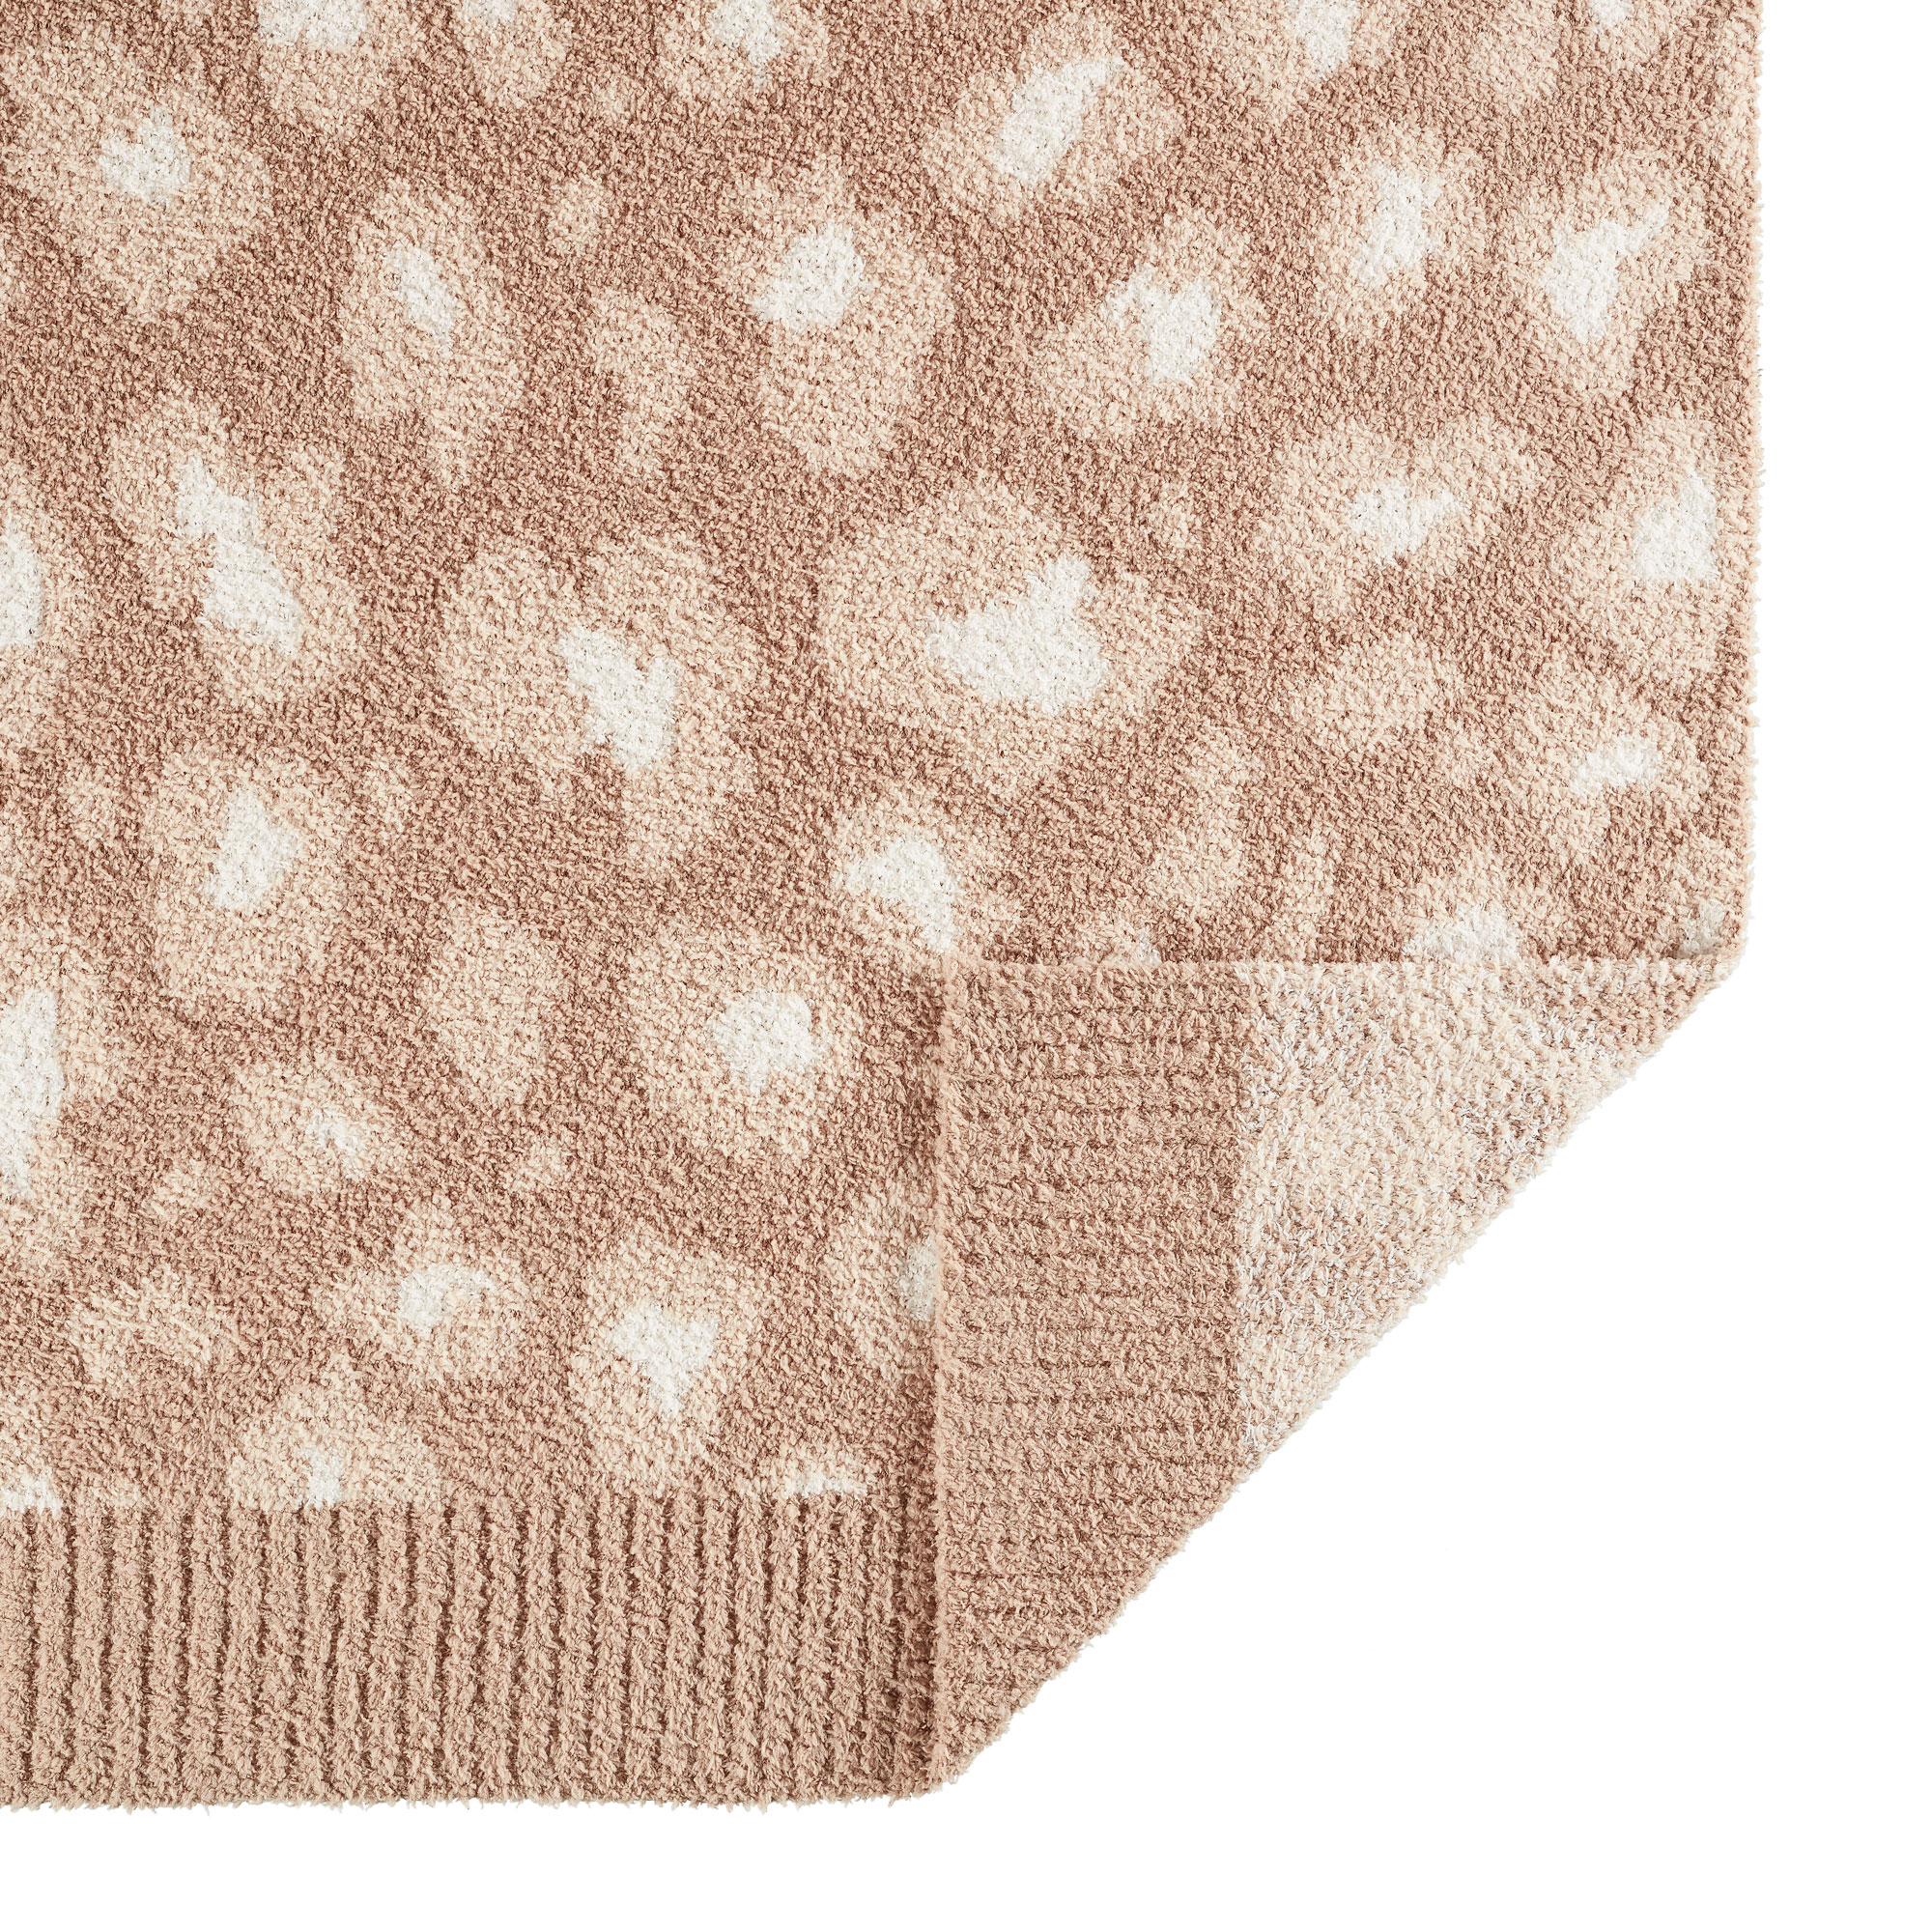 Better Homes & Gardens Cozy Knit Throw, 50"x72", Tan Animal Print - image 3 of 4